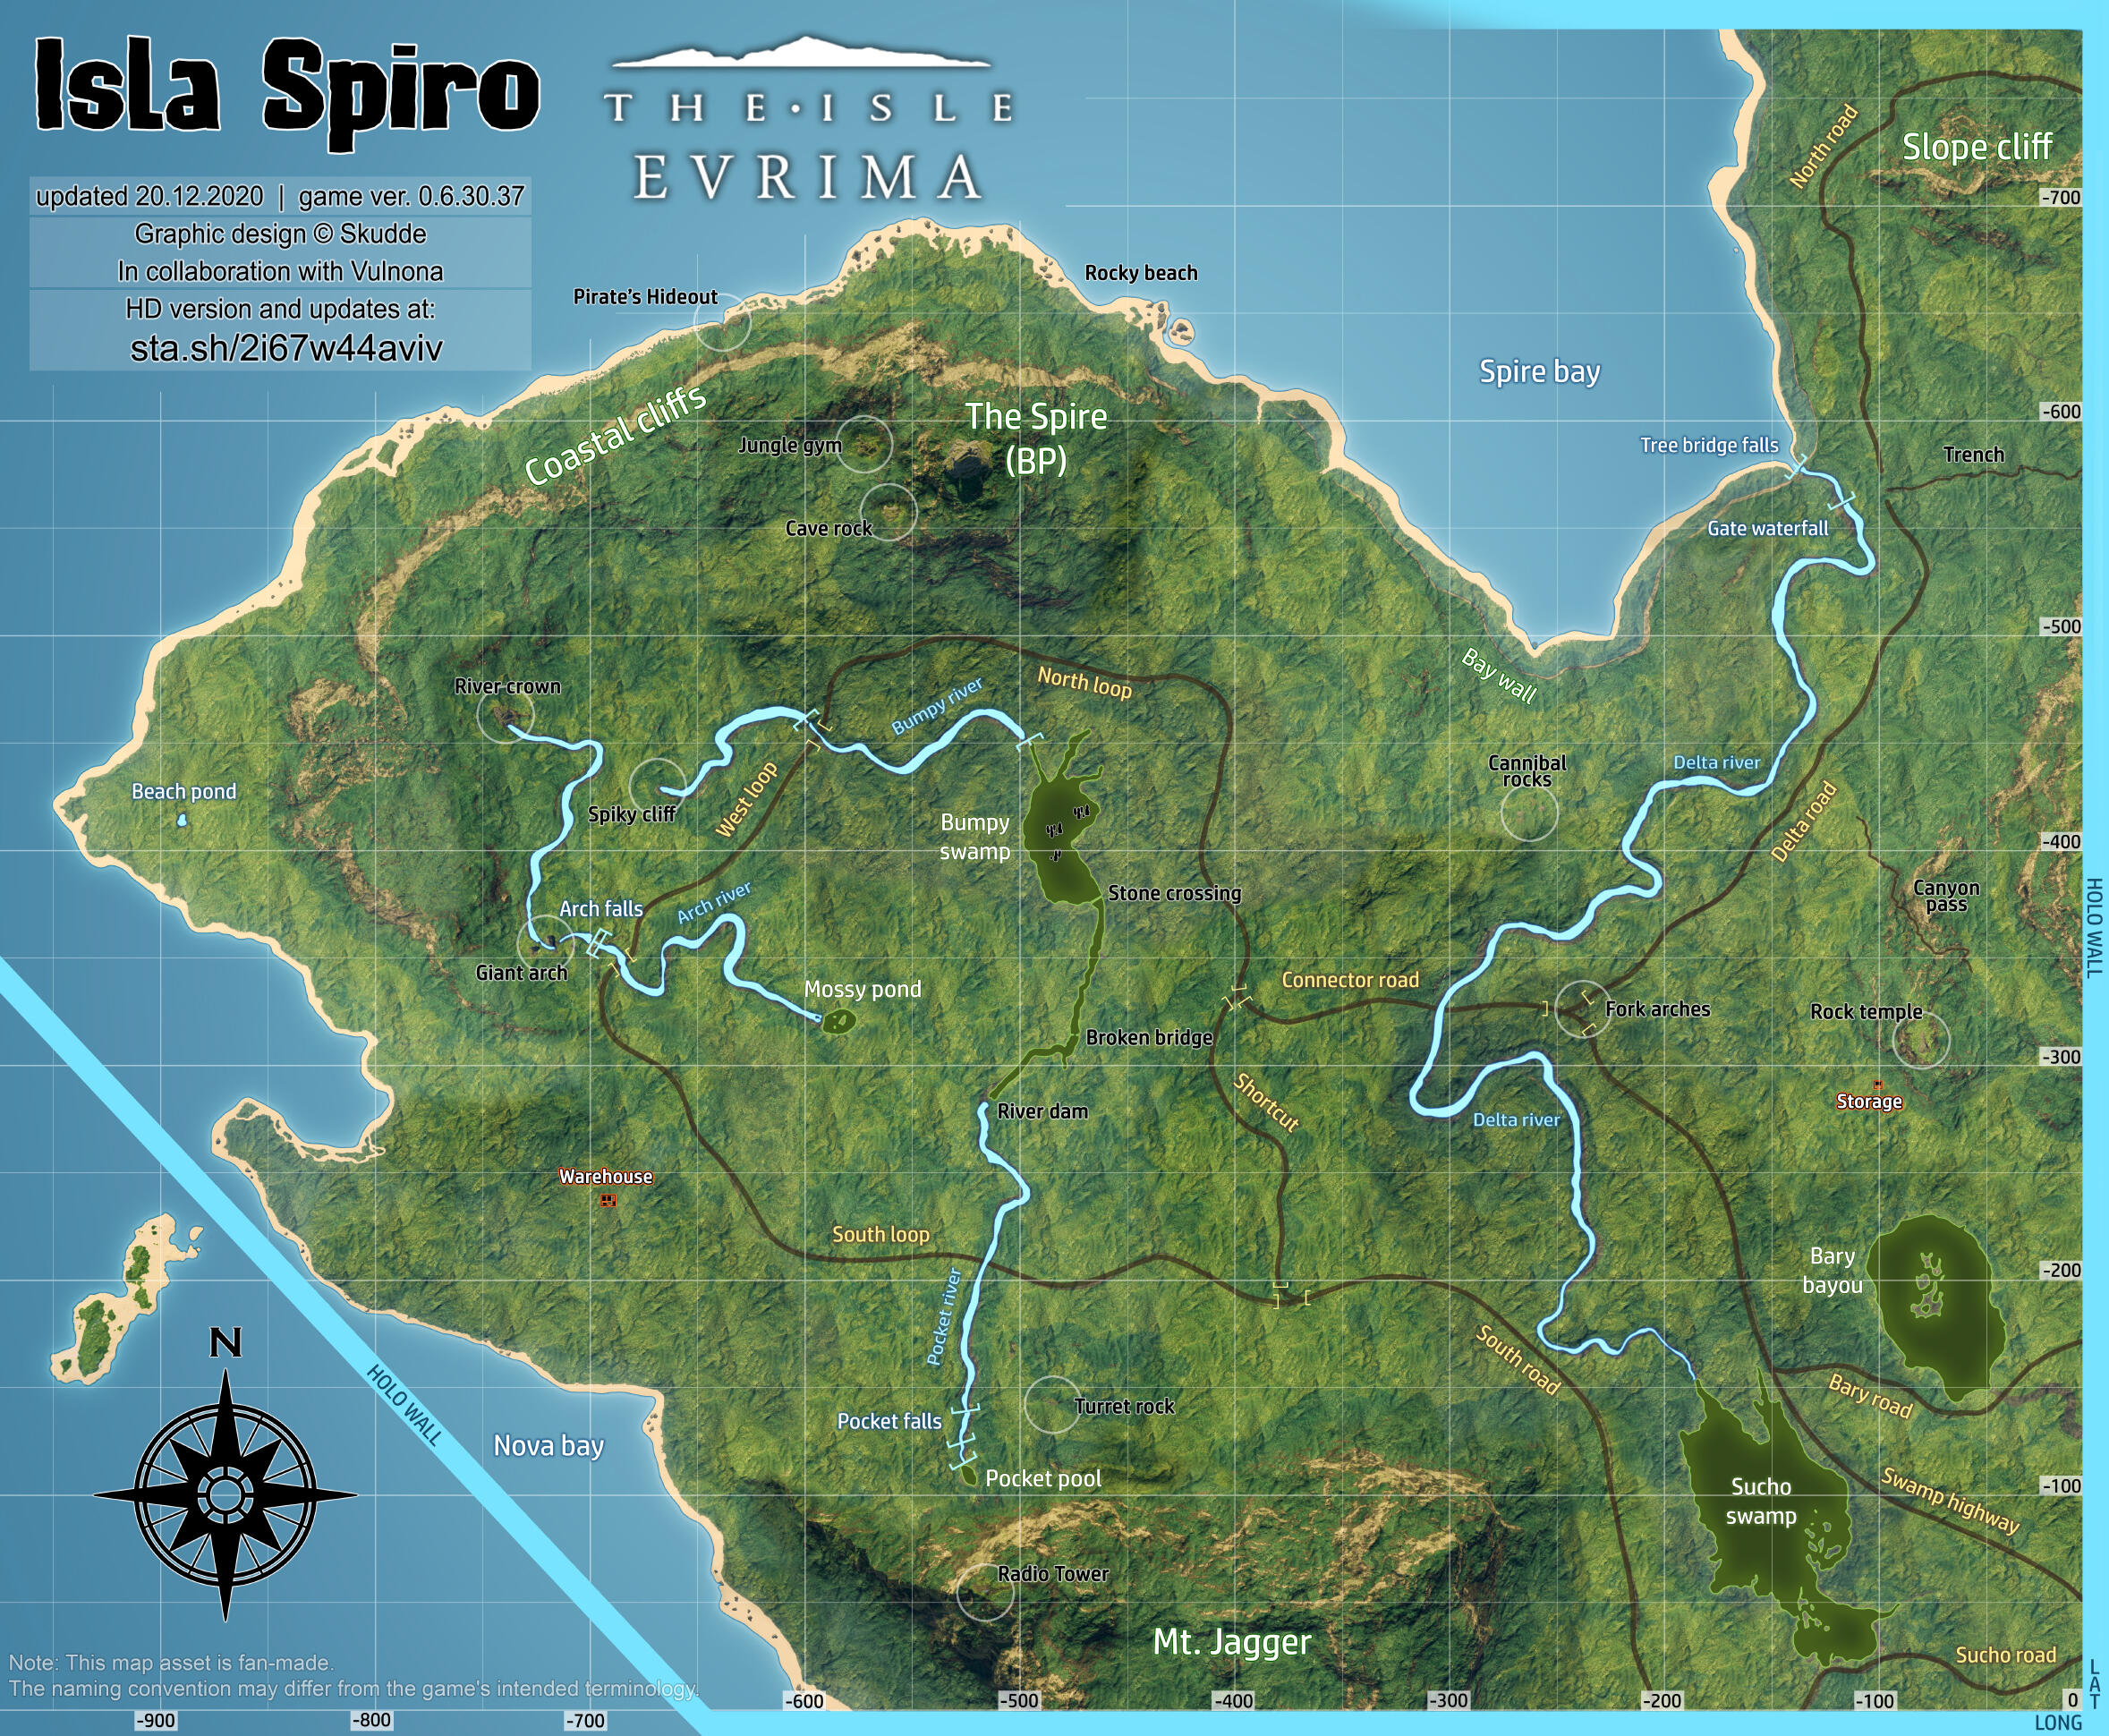 EVRIMA Map & Tips Steam Solo